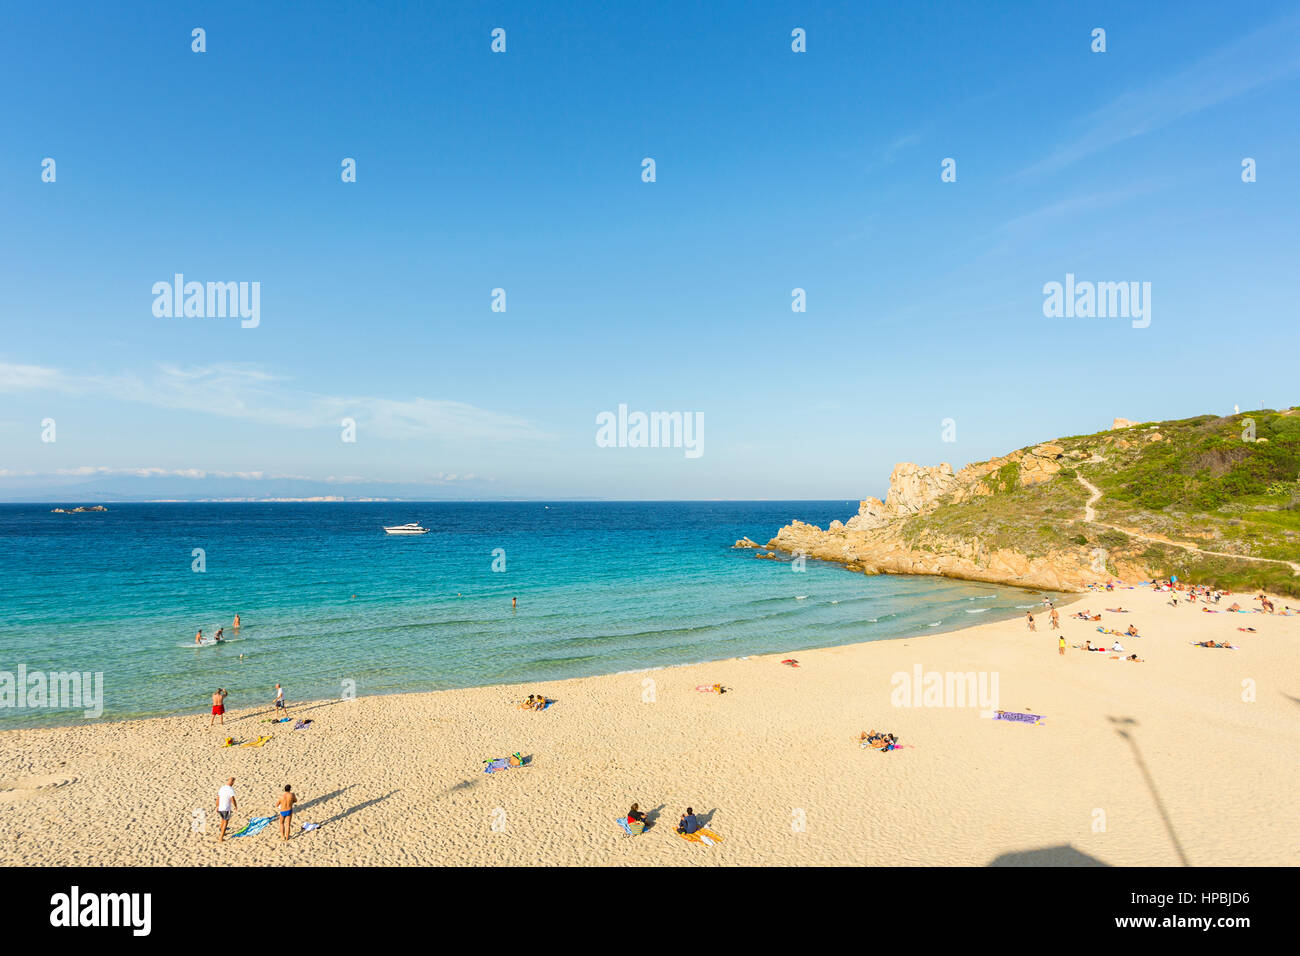 The beach of Rena BIanca at Santa Teresa Gallura, Sardinia Italy with the coast of Corsica Island in the background Stock Photo